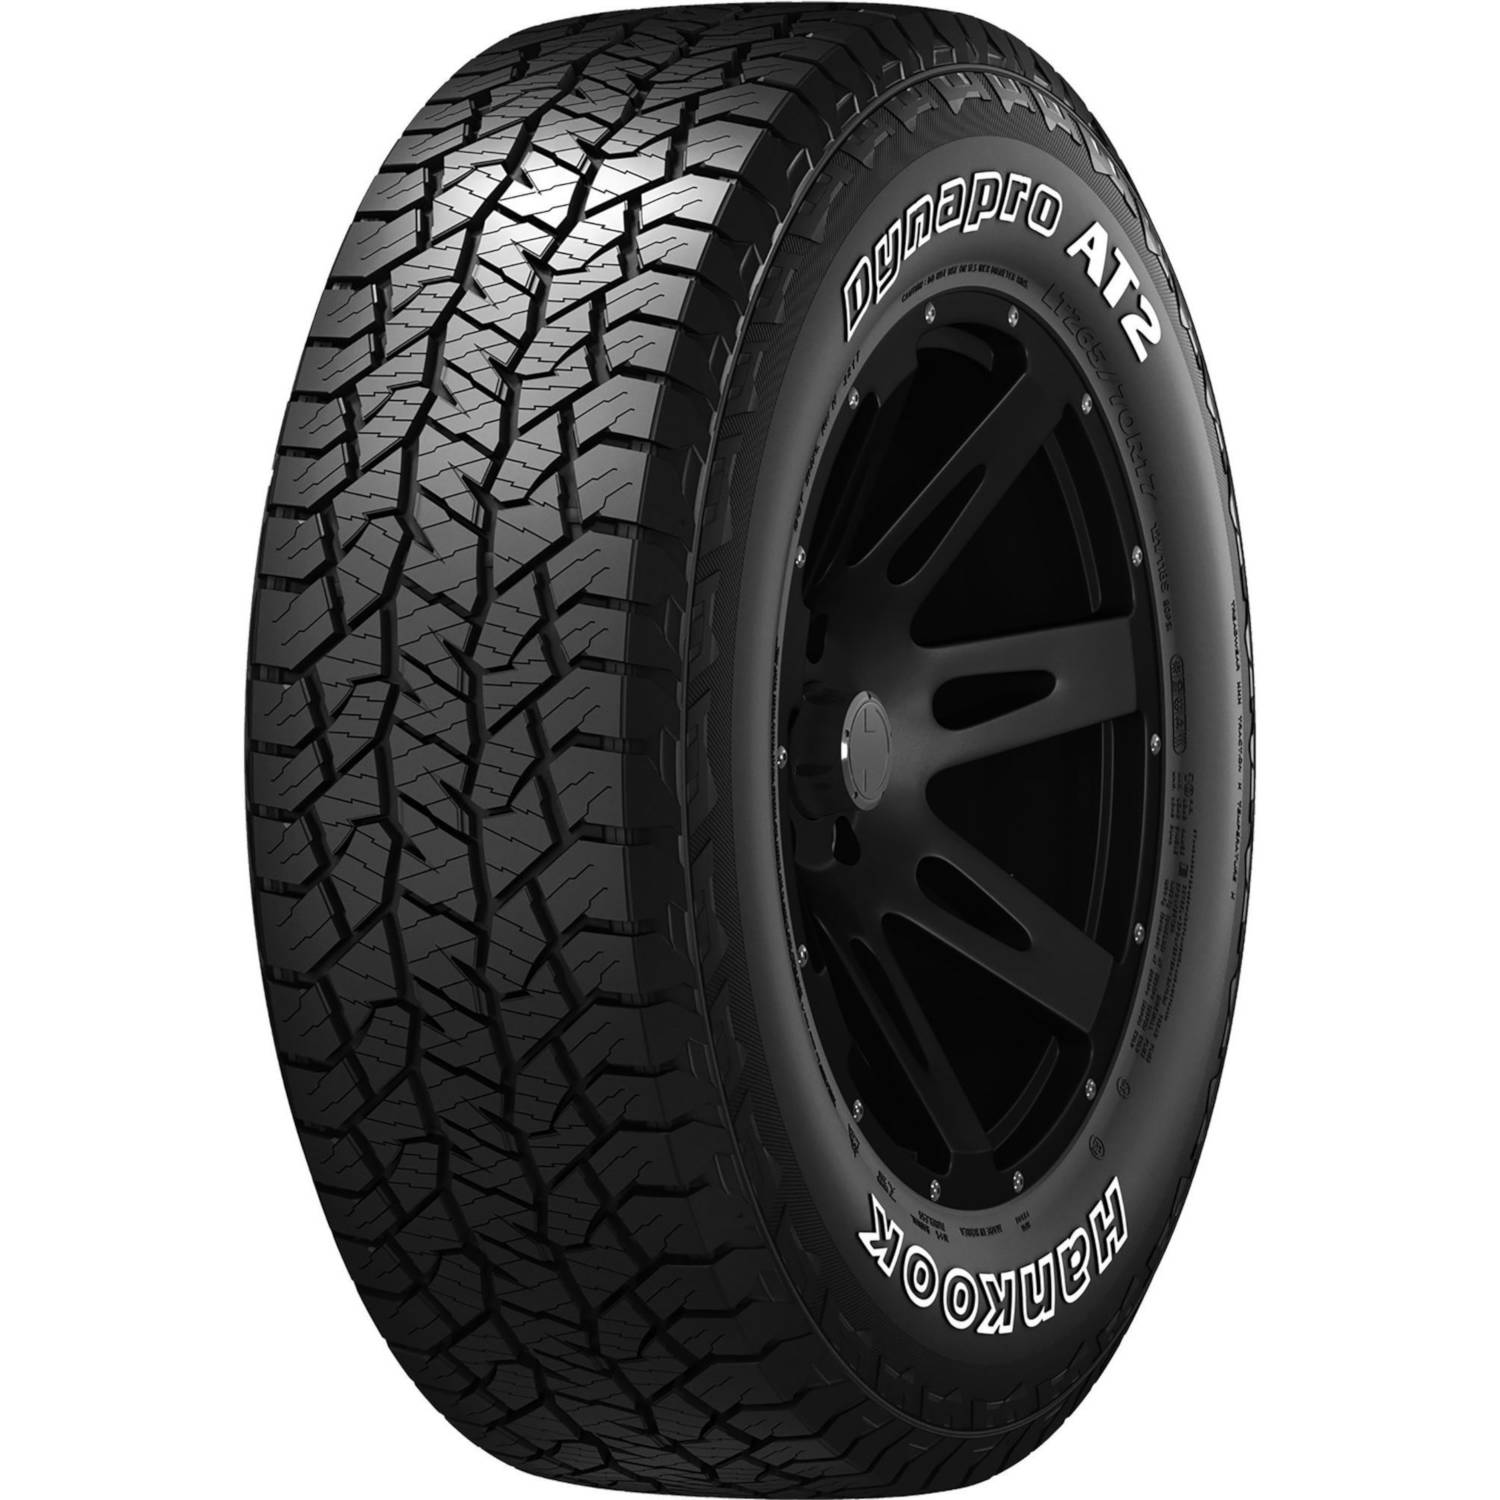 HANKOOK DYNAPRO AT2 225/75R16 XL (29.2X8.9R 16) Tires